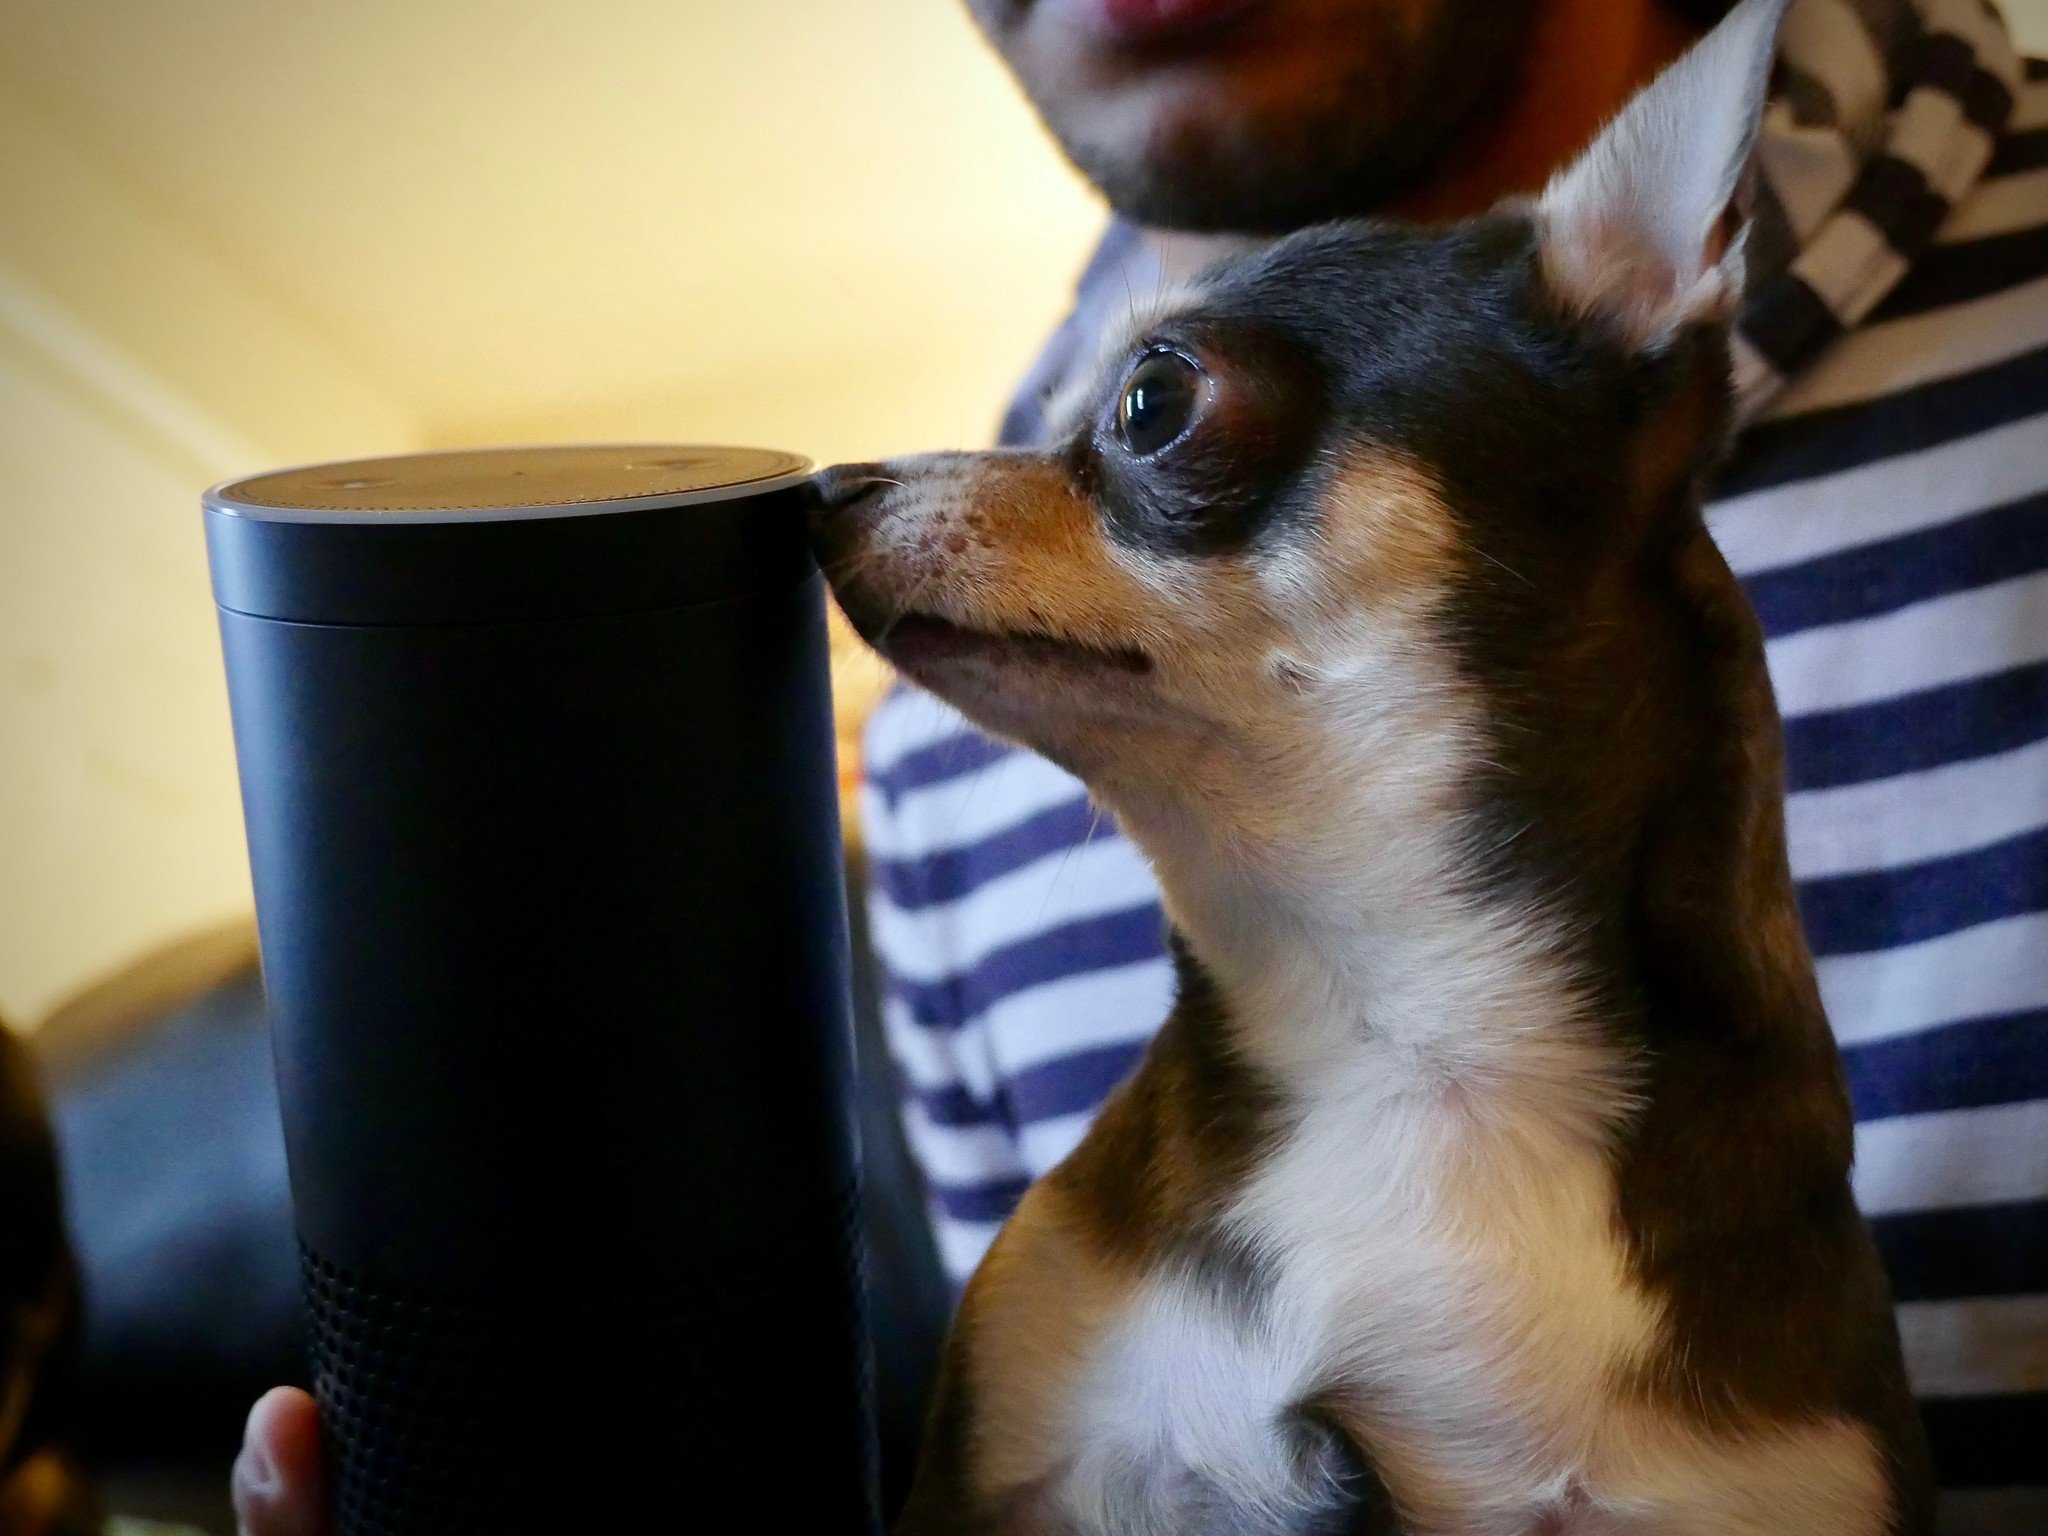 With Amazon Petlexa, Alexa becomes dog's best friend | iMore